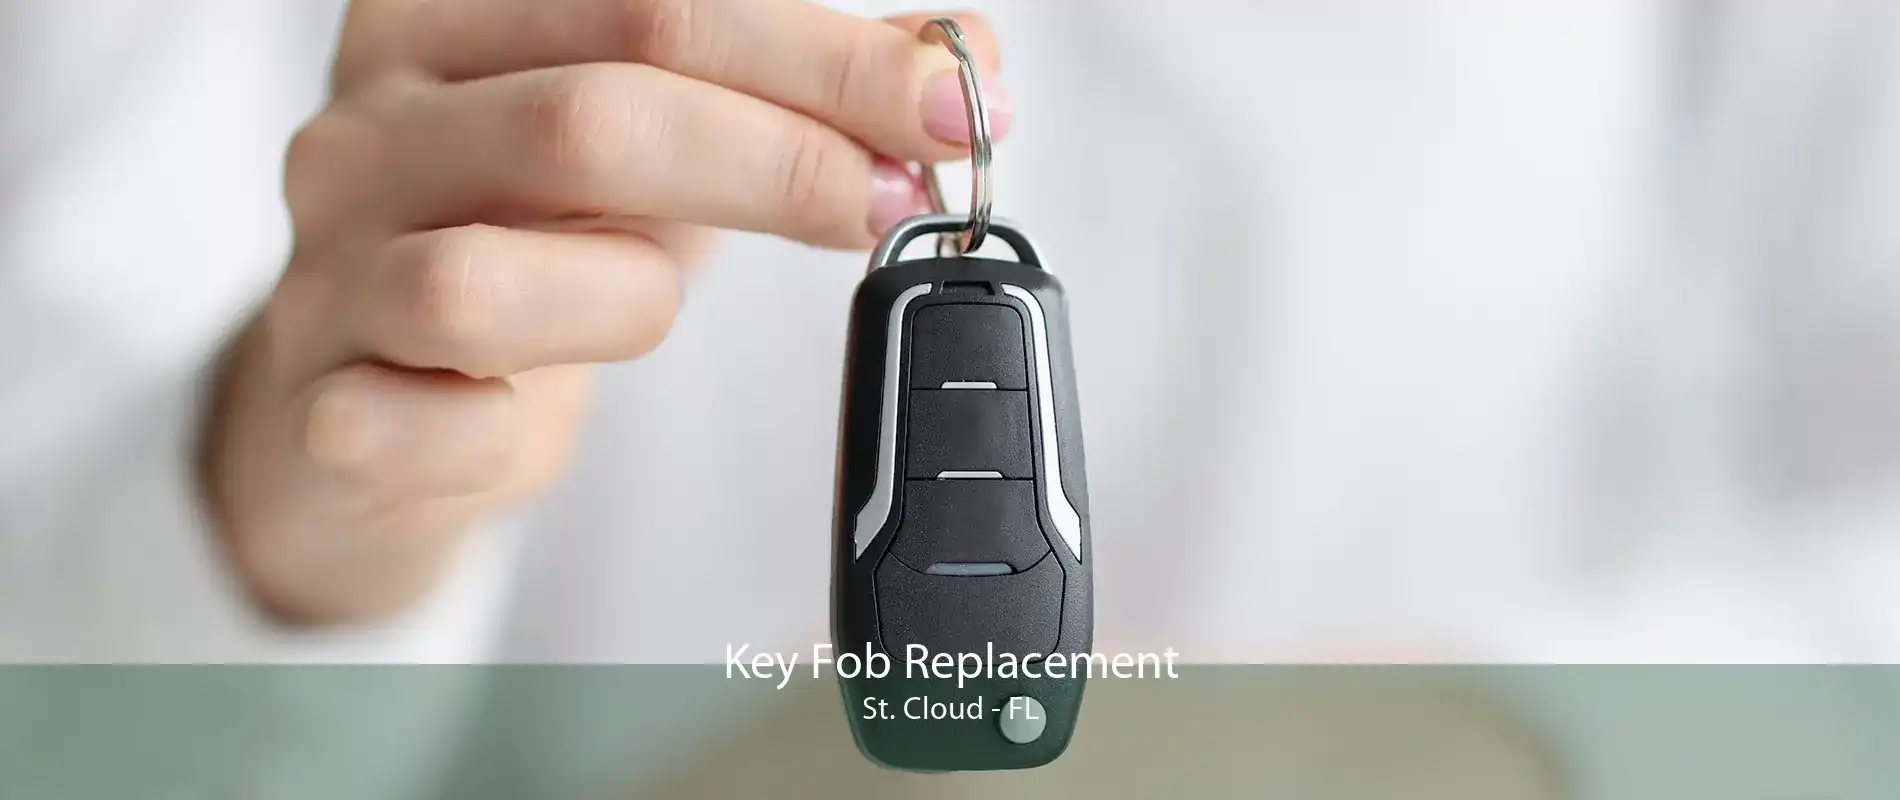 Key Fob Replacement St. Cloud - FL